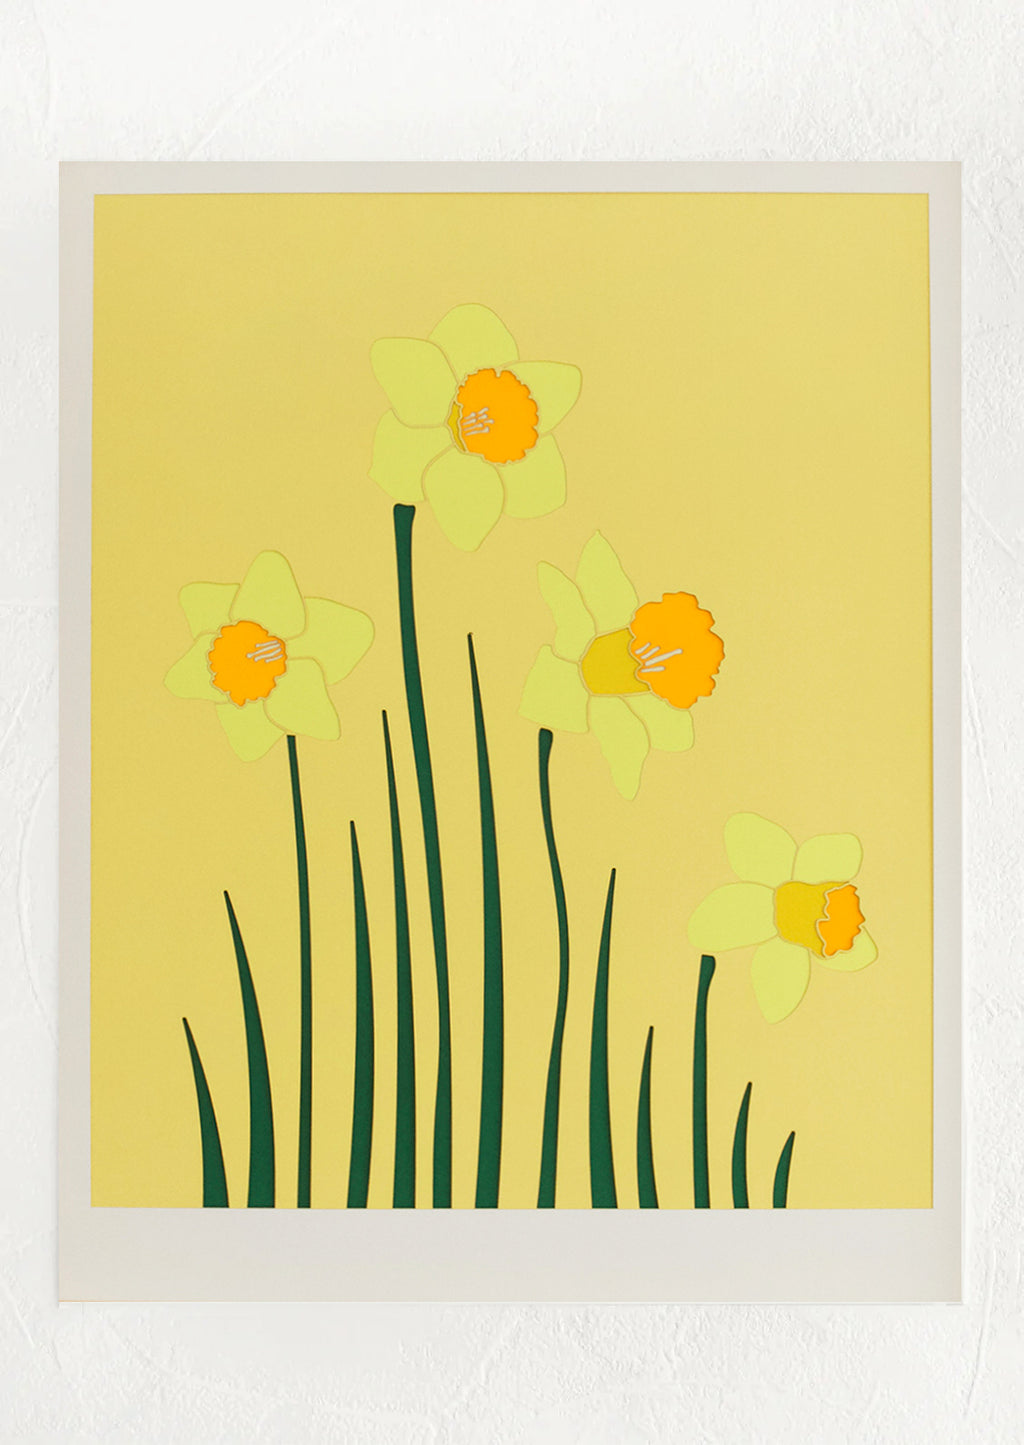 1: A lasercut artwork depicting daffodils on yellow background.